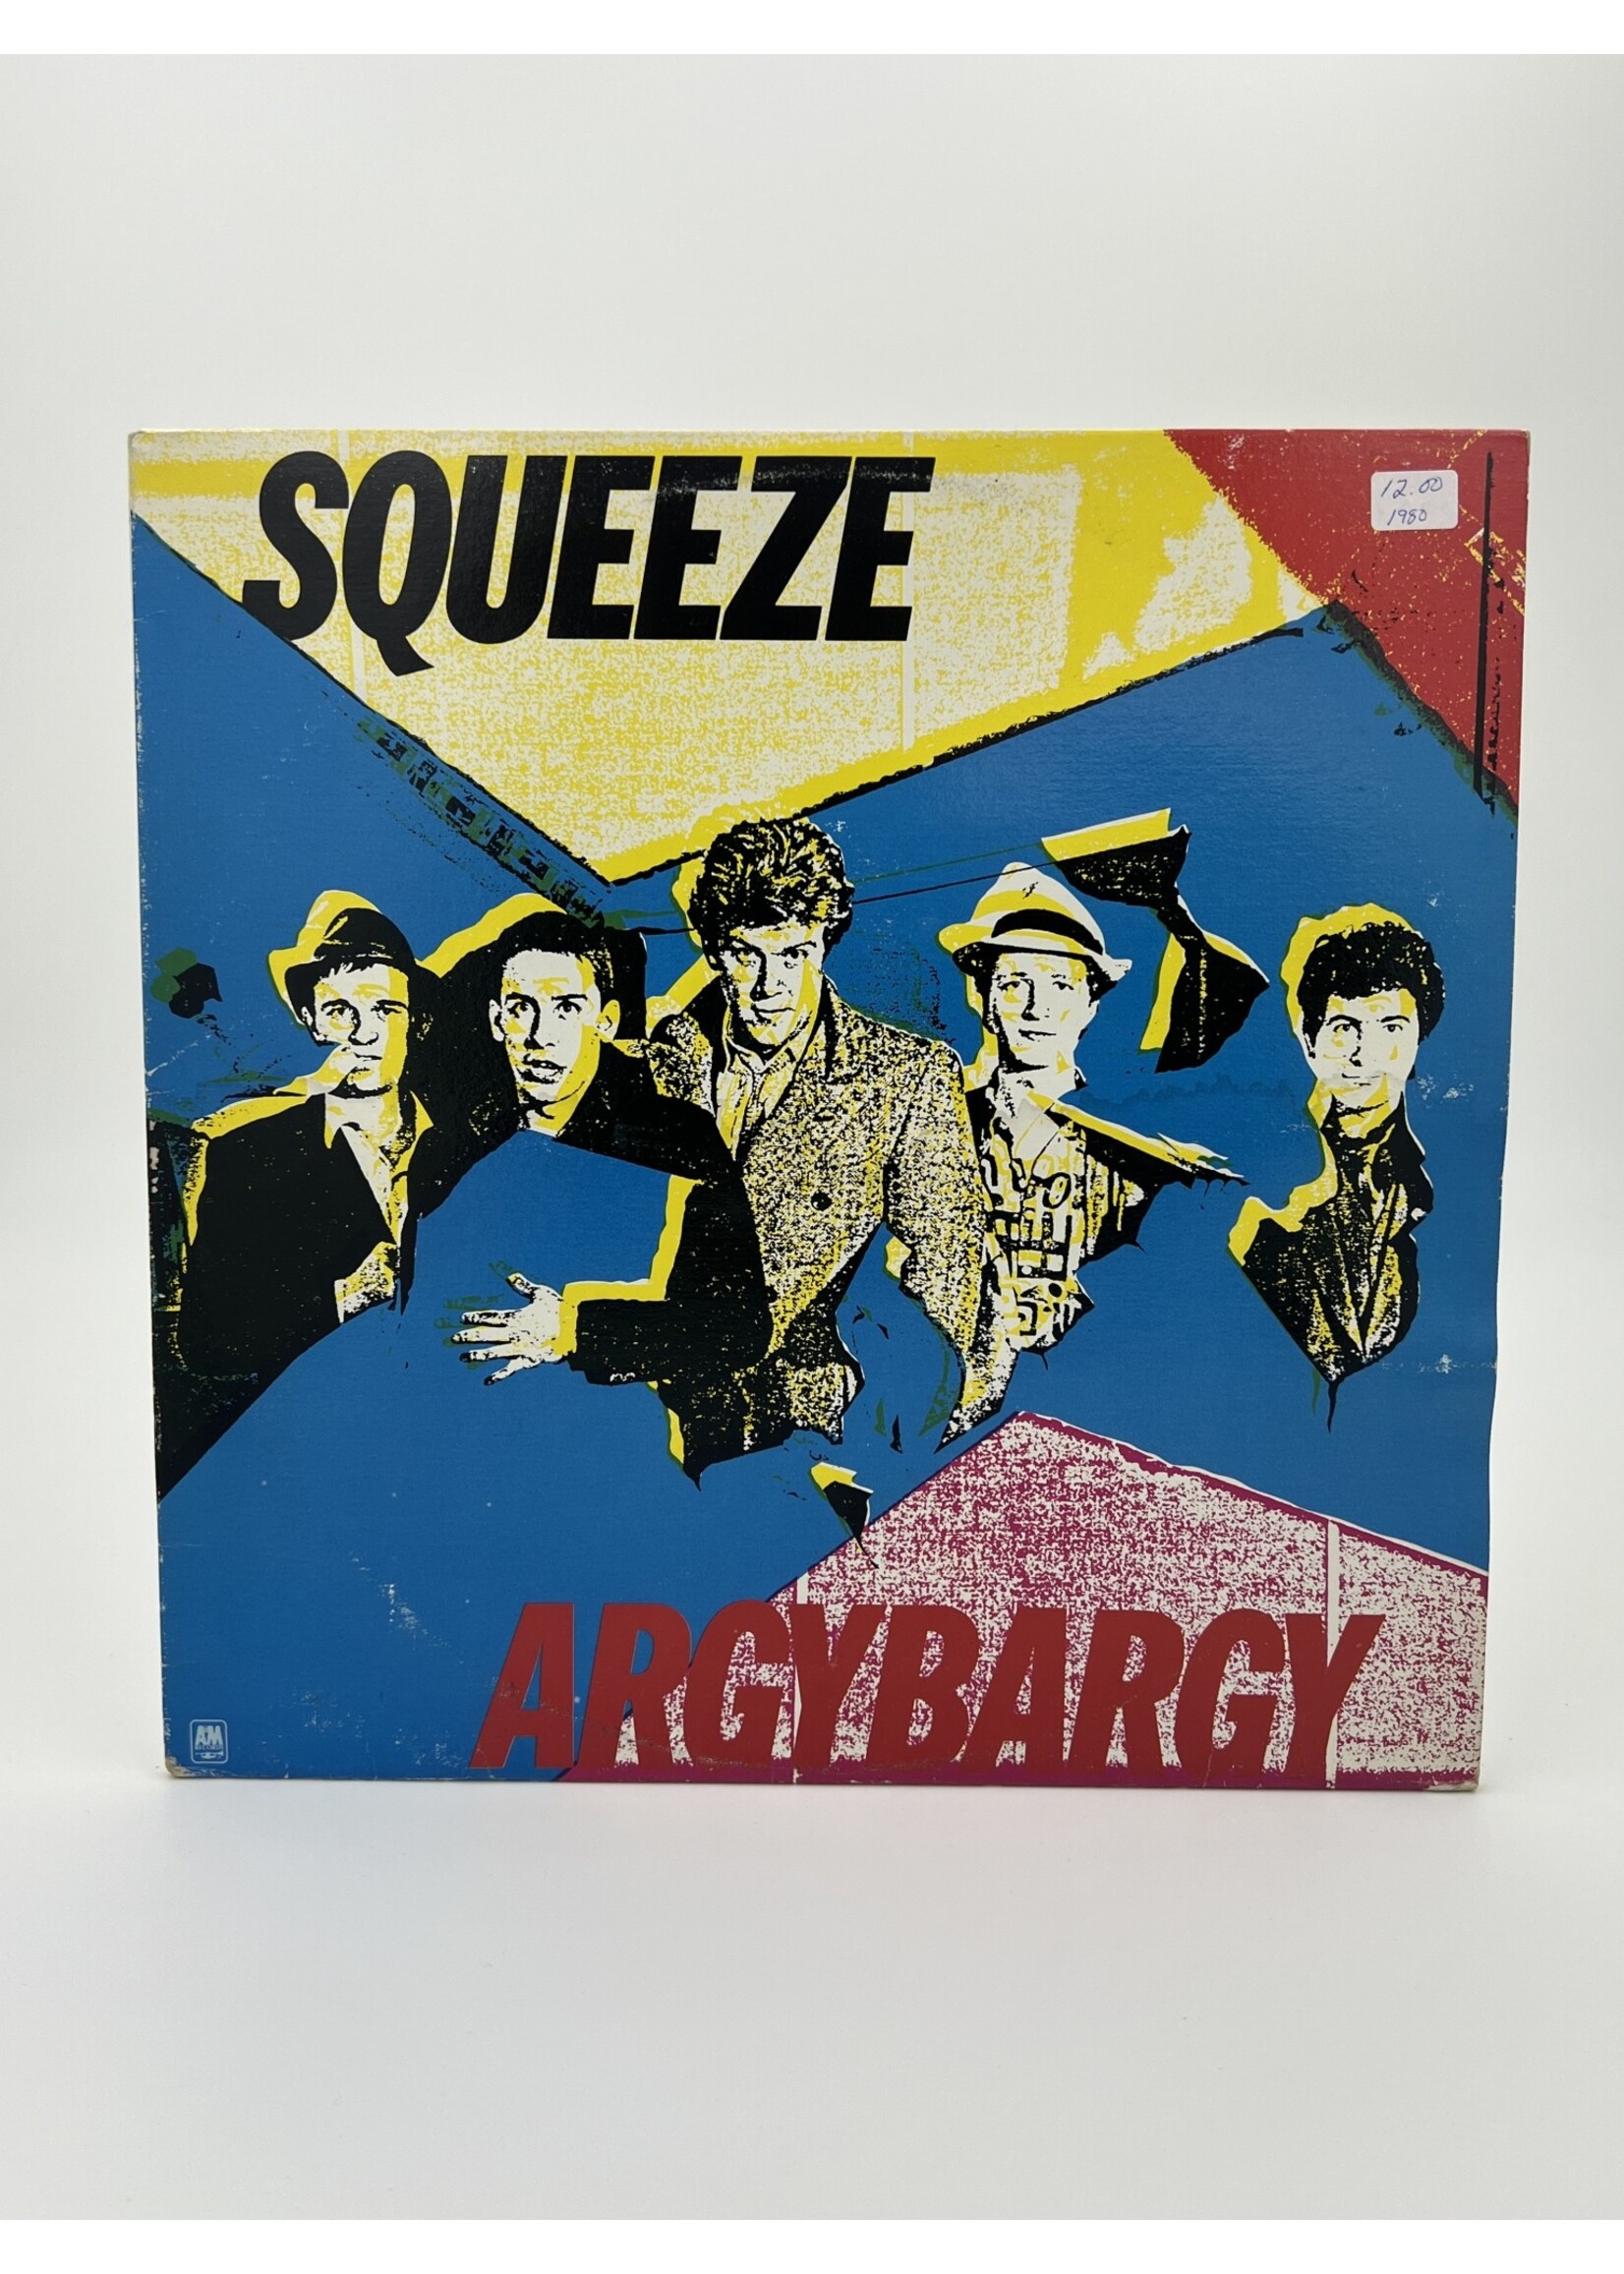 LP Squeeze Argybargy LP Record